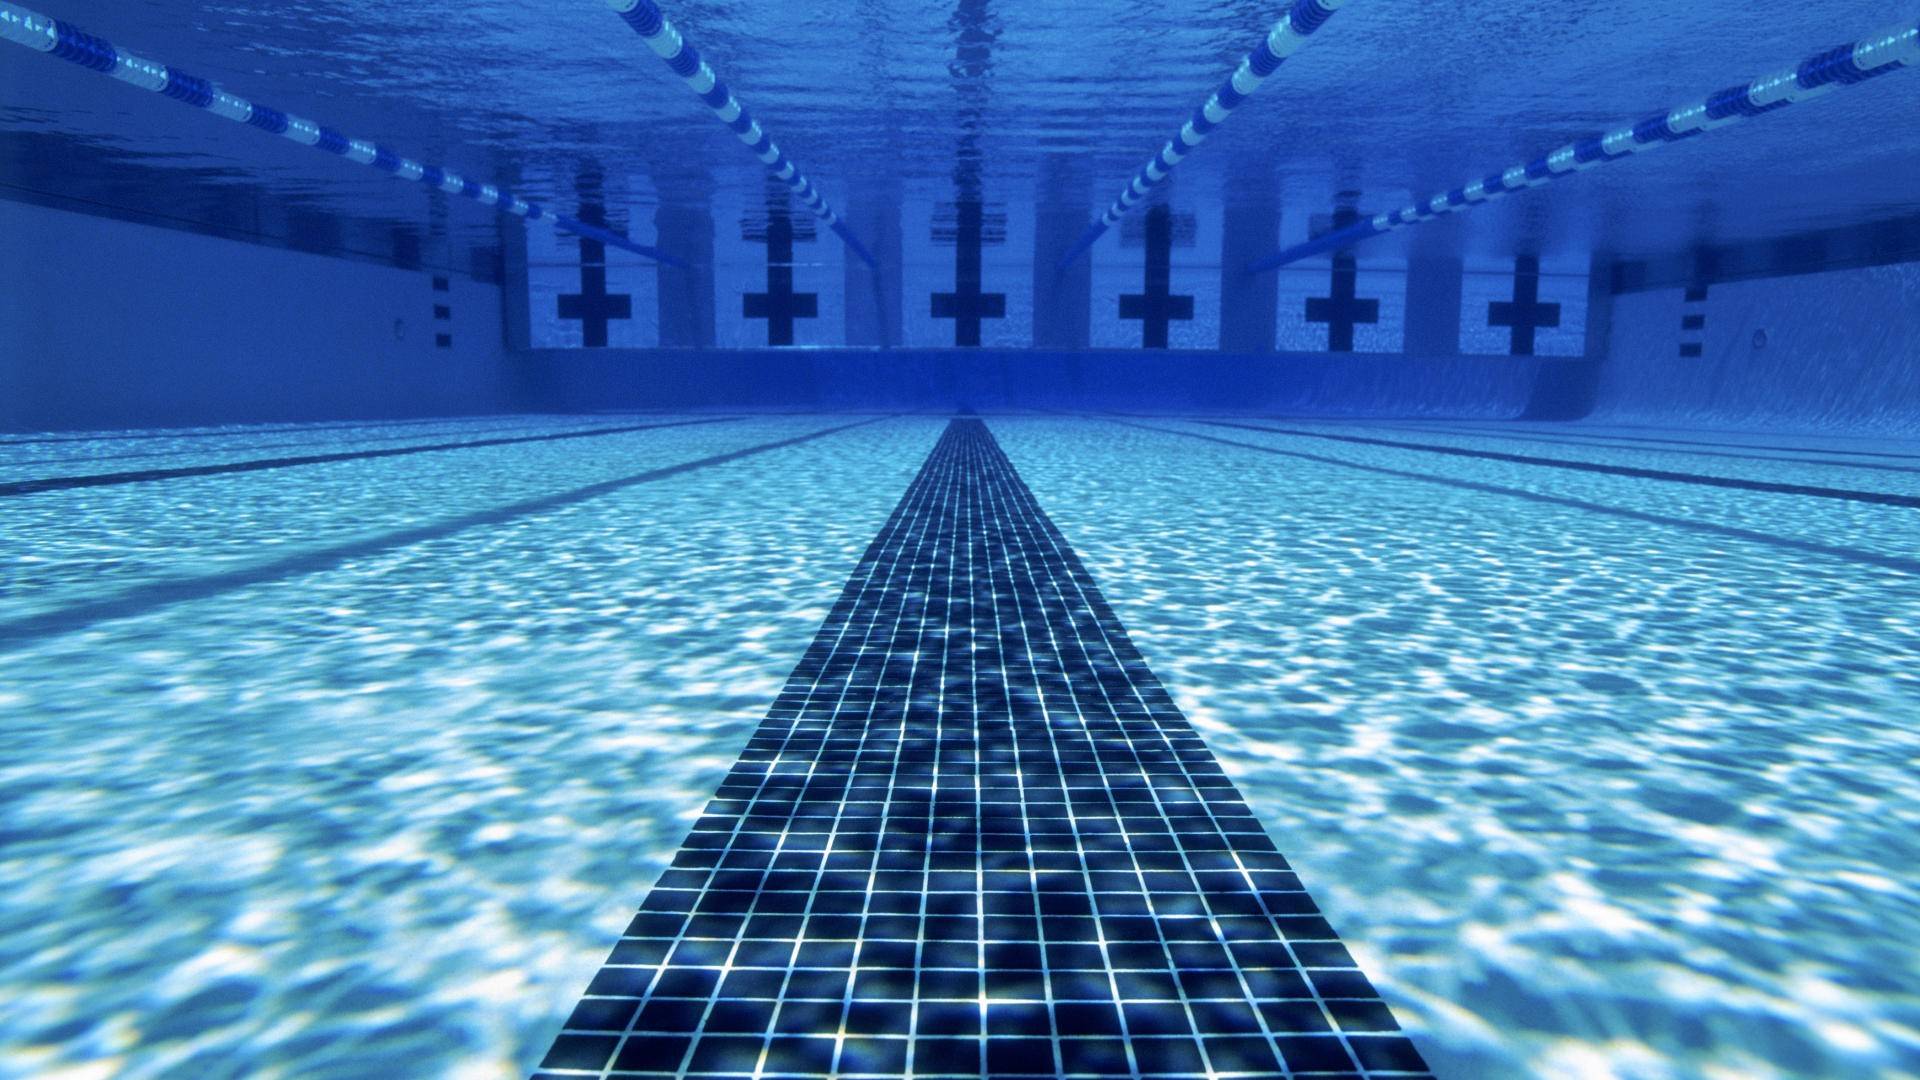 Swimming Pools Wallpaper